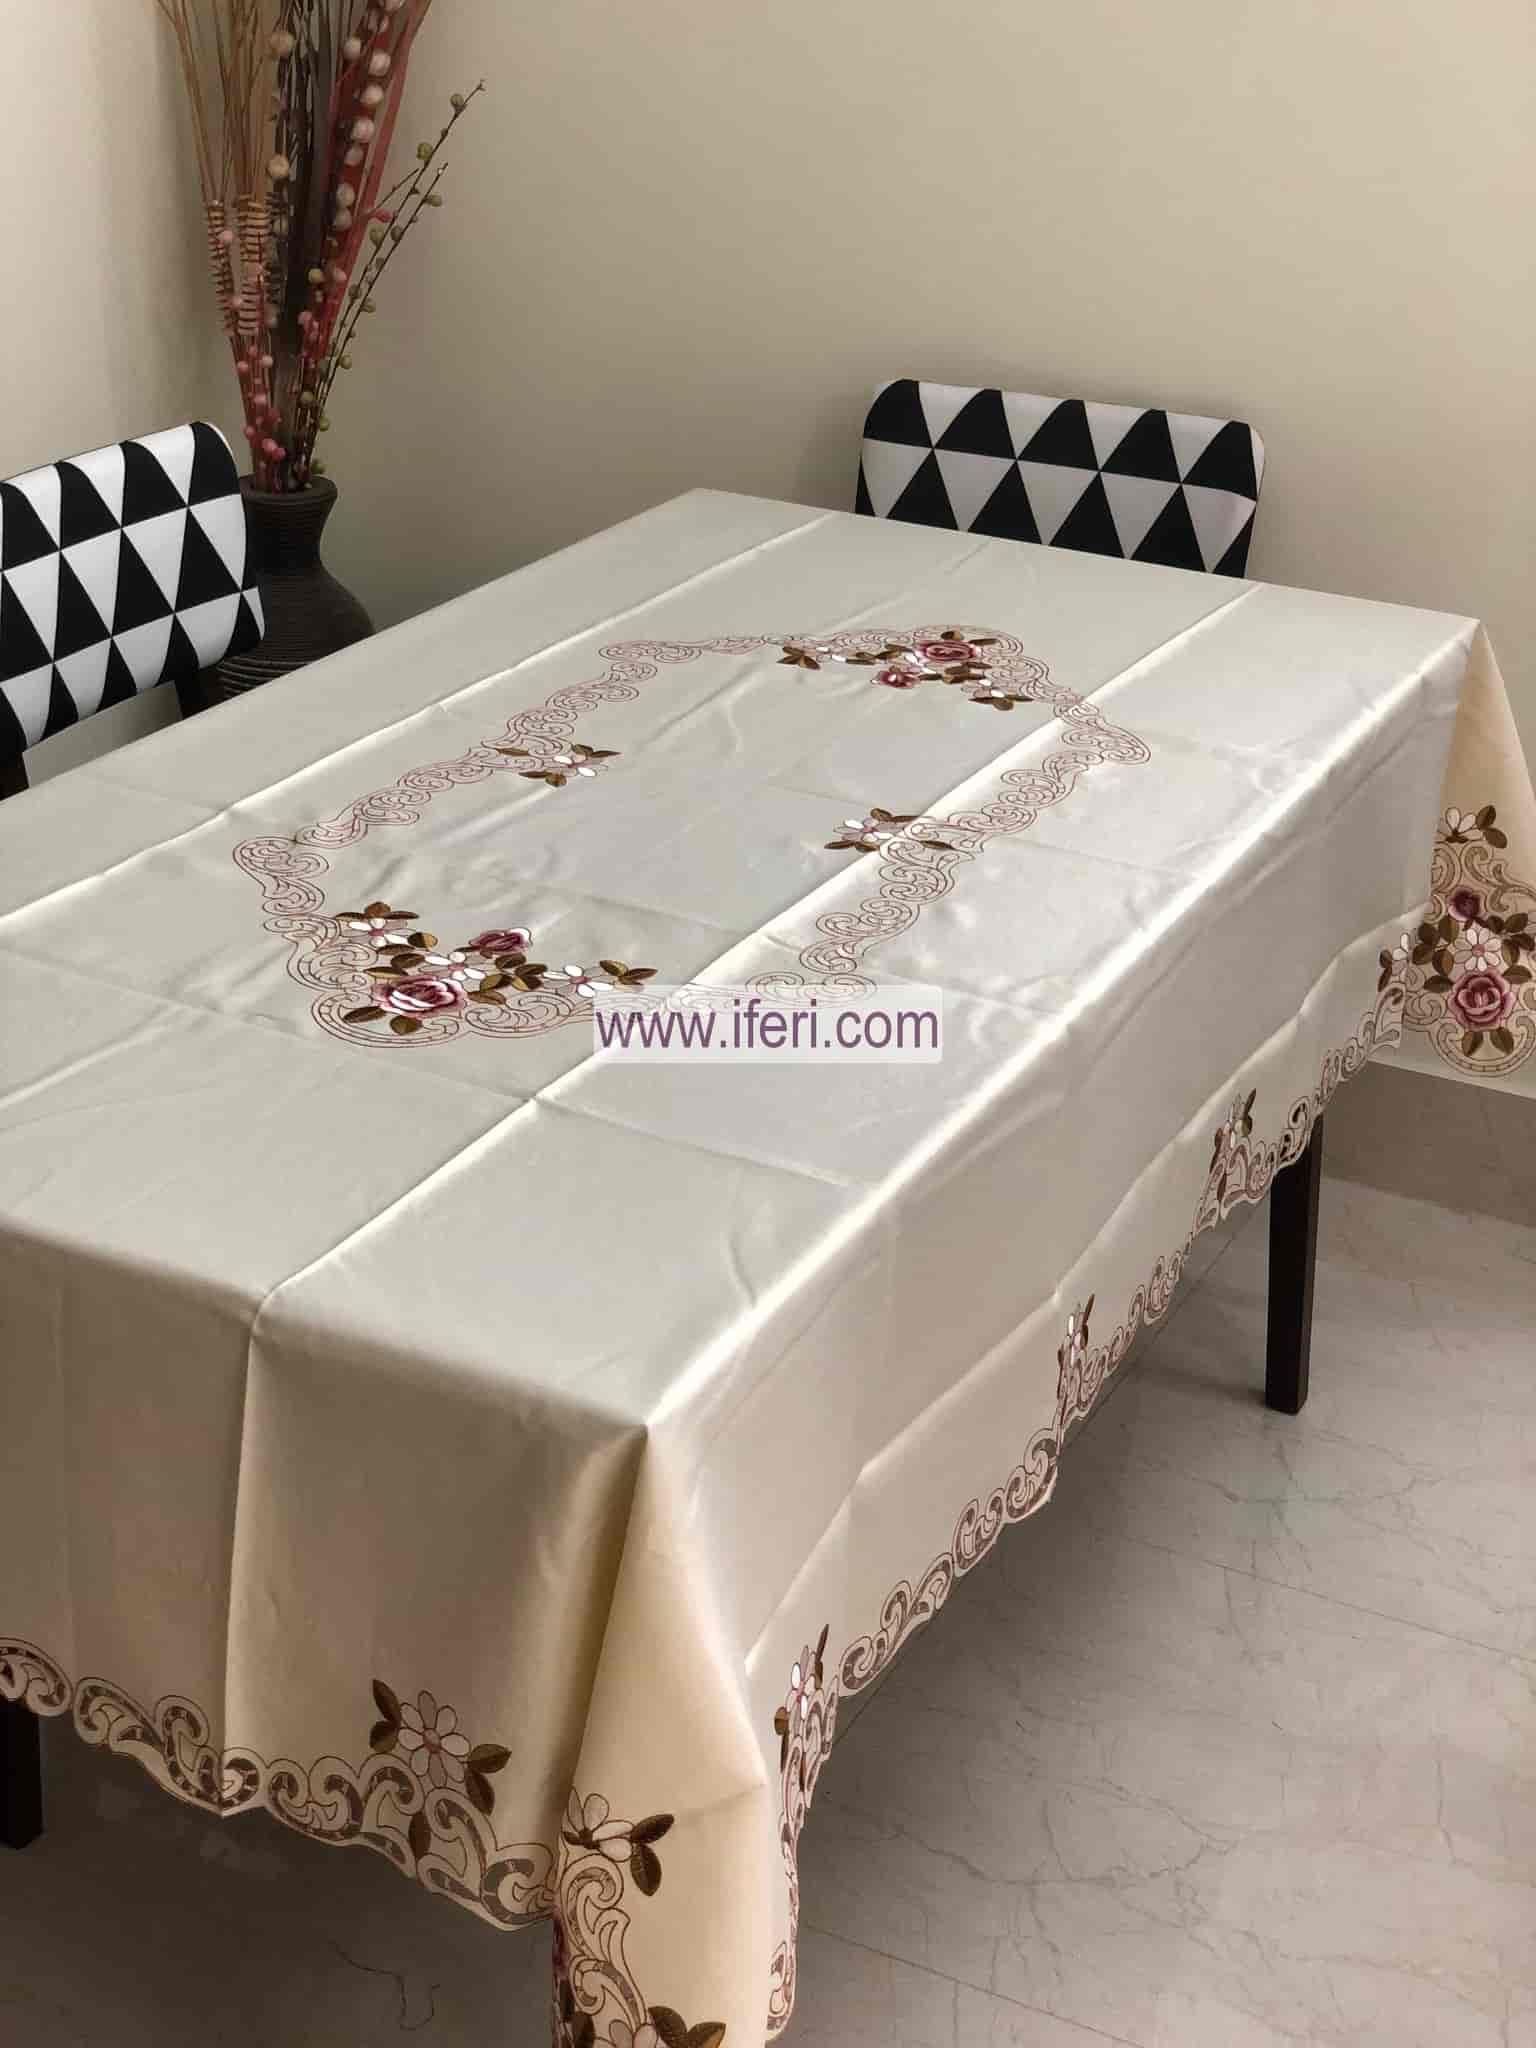 Exclusive Table Cloth RJ42115 Price in Bangladesh - iferi.com